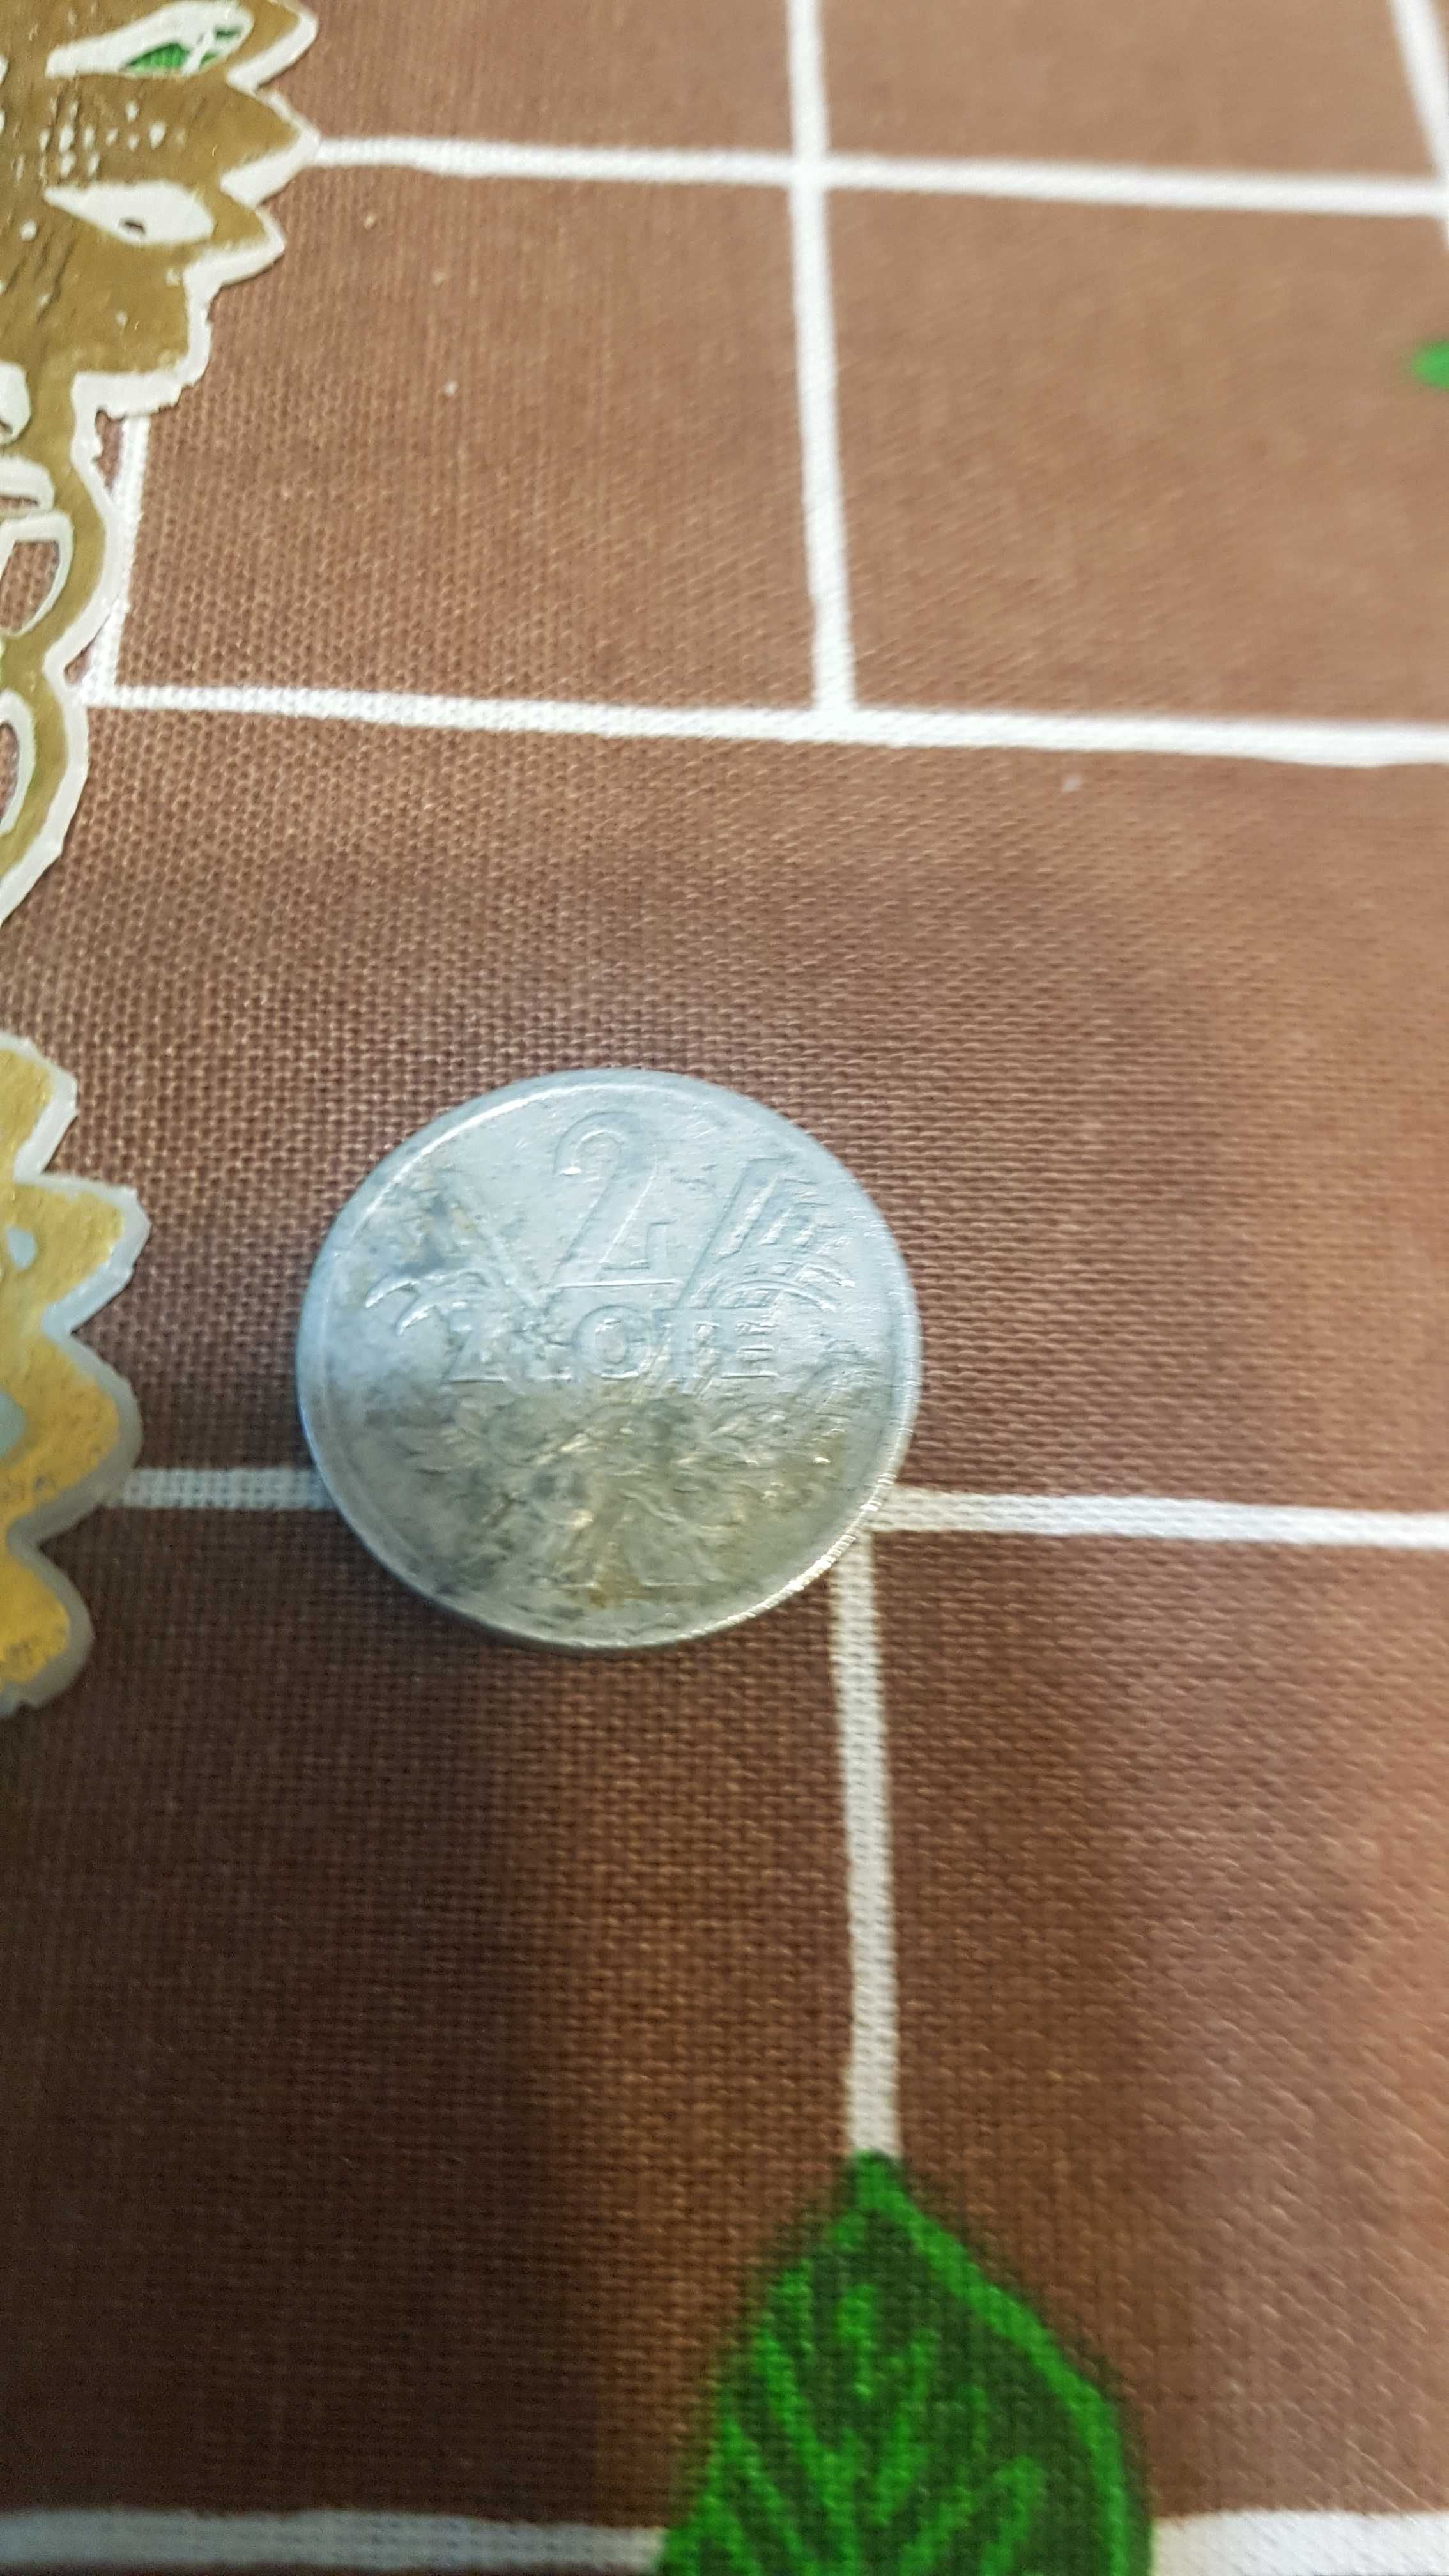 Moneta 2 zł 1970 r.